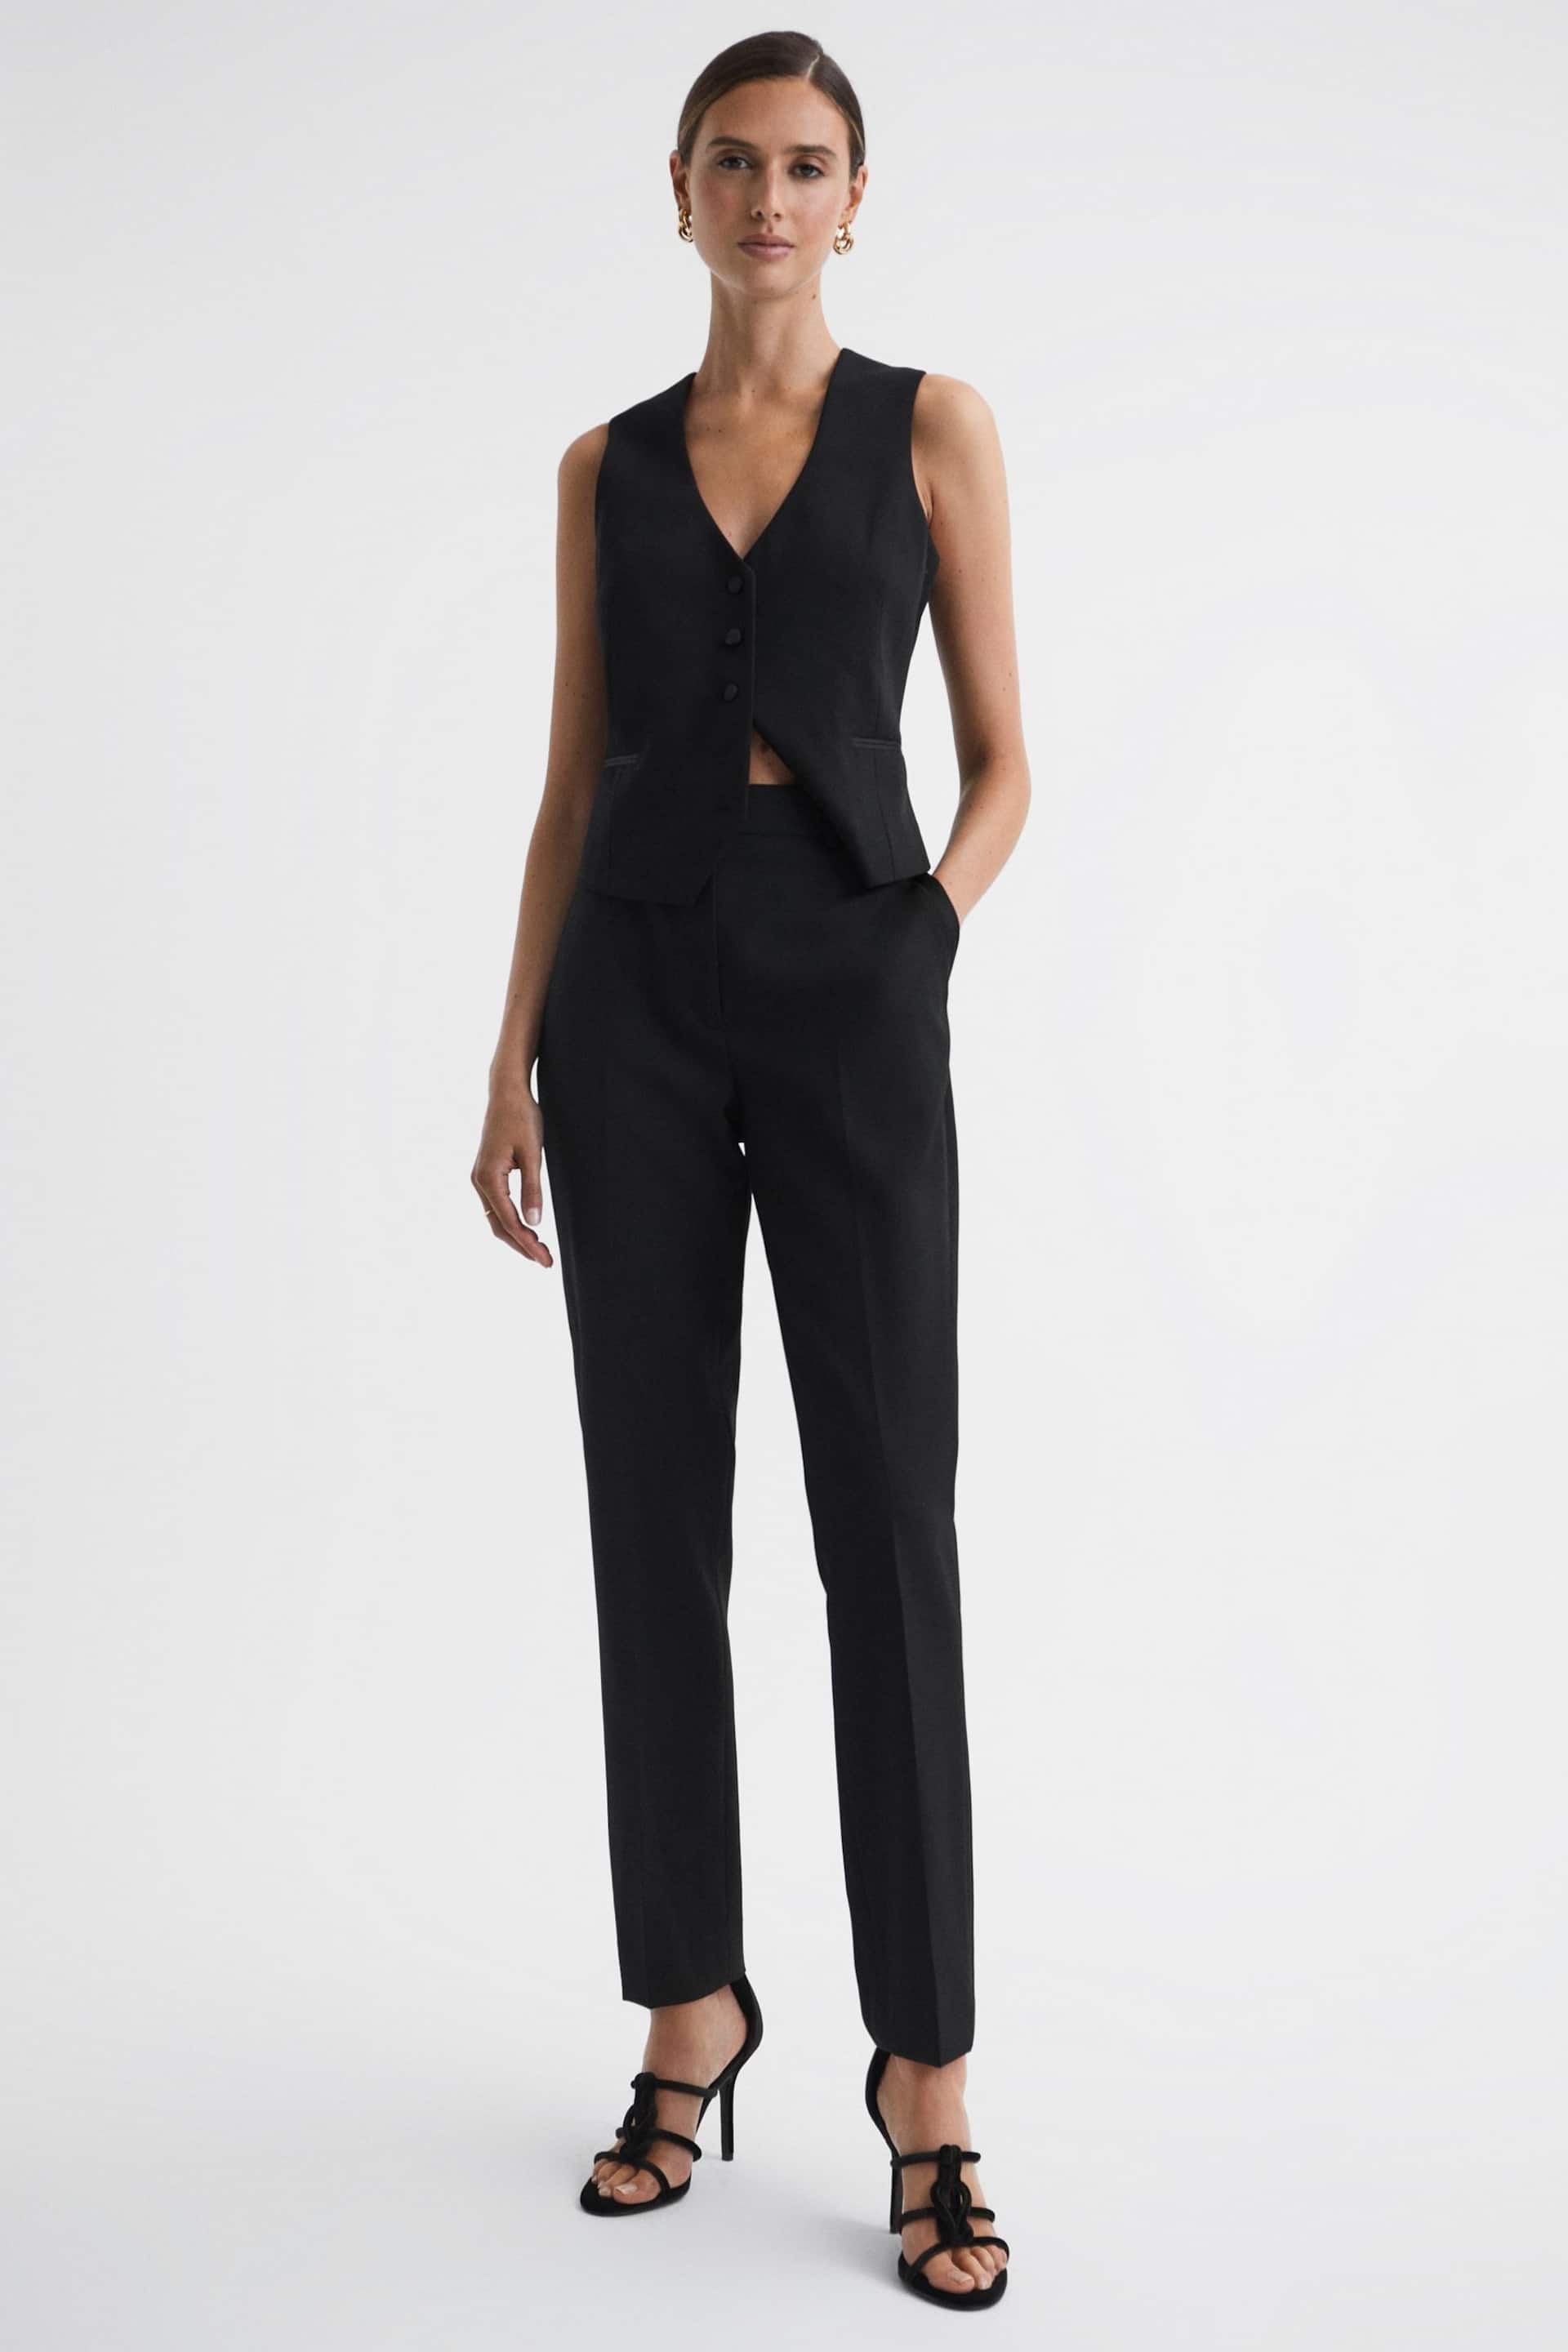 Reiss Black Alia Slim Fit Satin Stripe Suit Trousers - Image 3 of 5